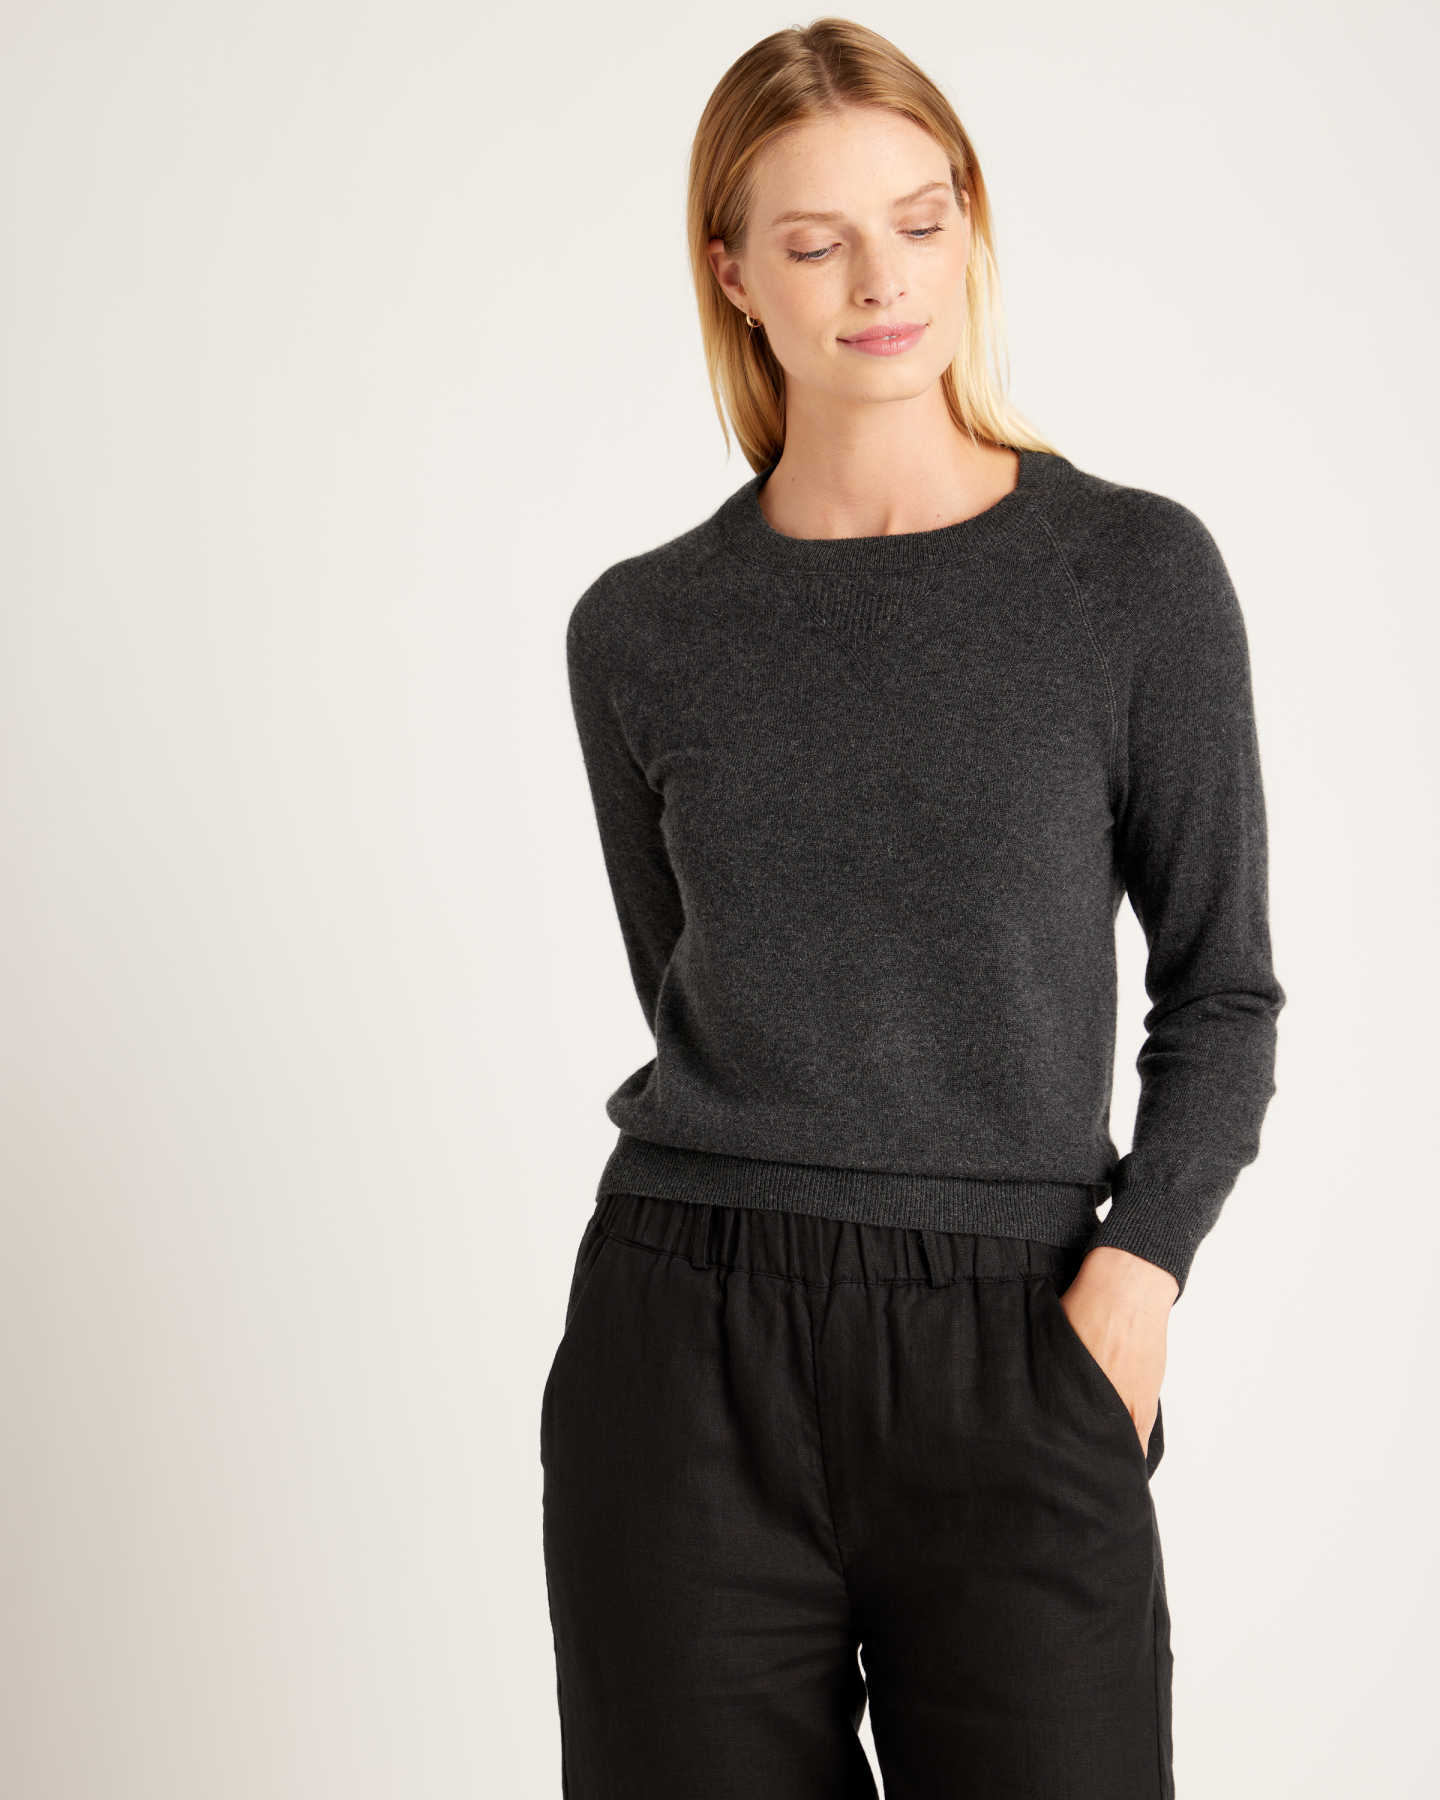 Super Luxe Baby Cashmere Sweatshirt - Charcoal